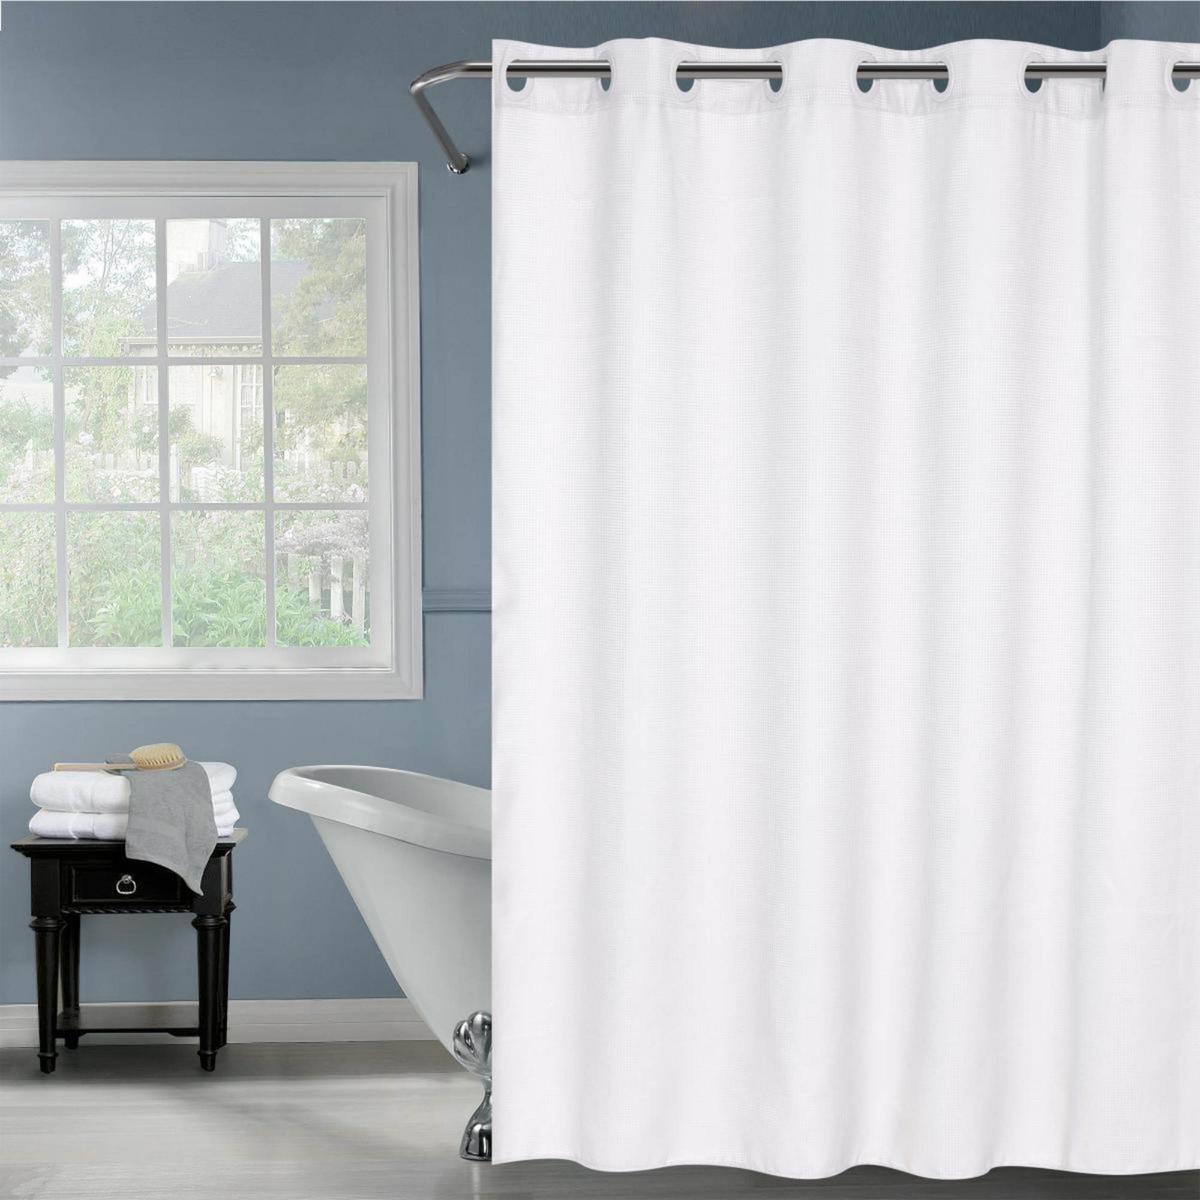 Cortina de ducha impermeable PEVA marruecos, cortinas de baño con